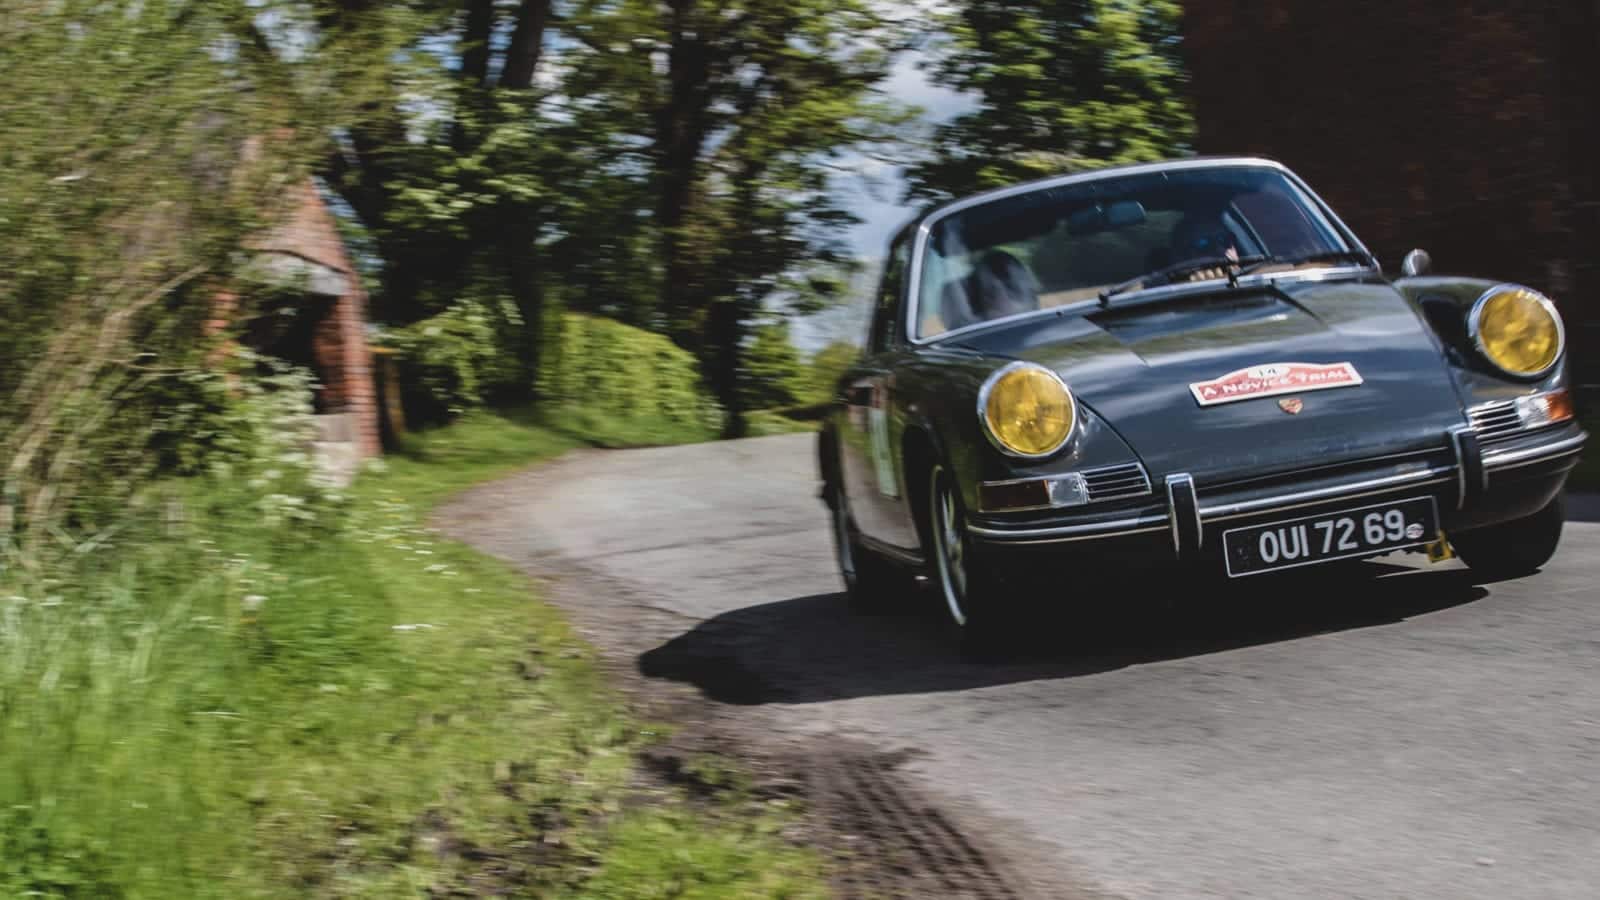 Porsche 911 on HERO Novice Trial 2019 event